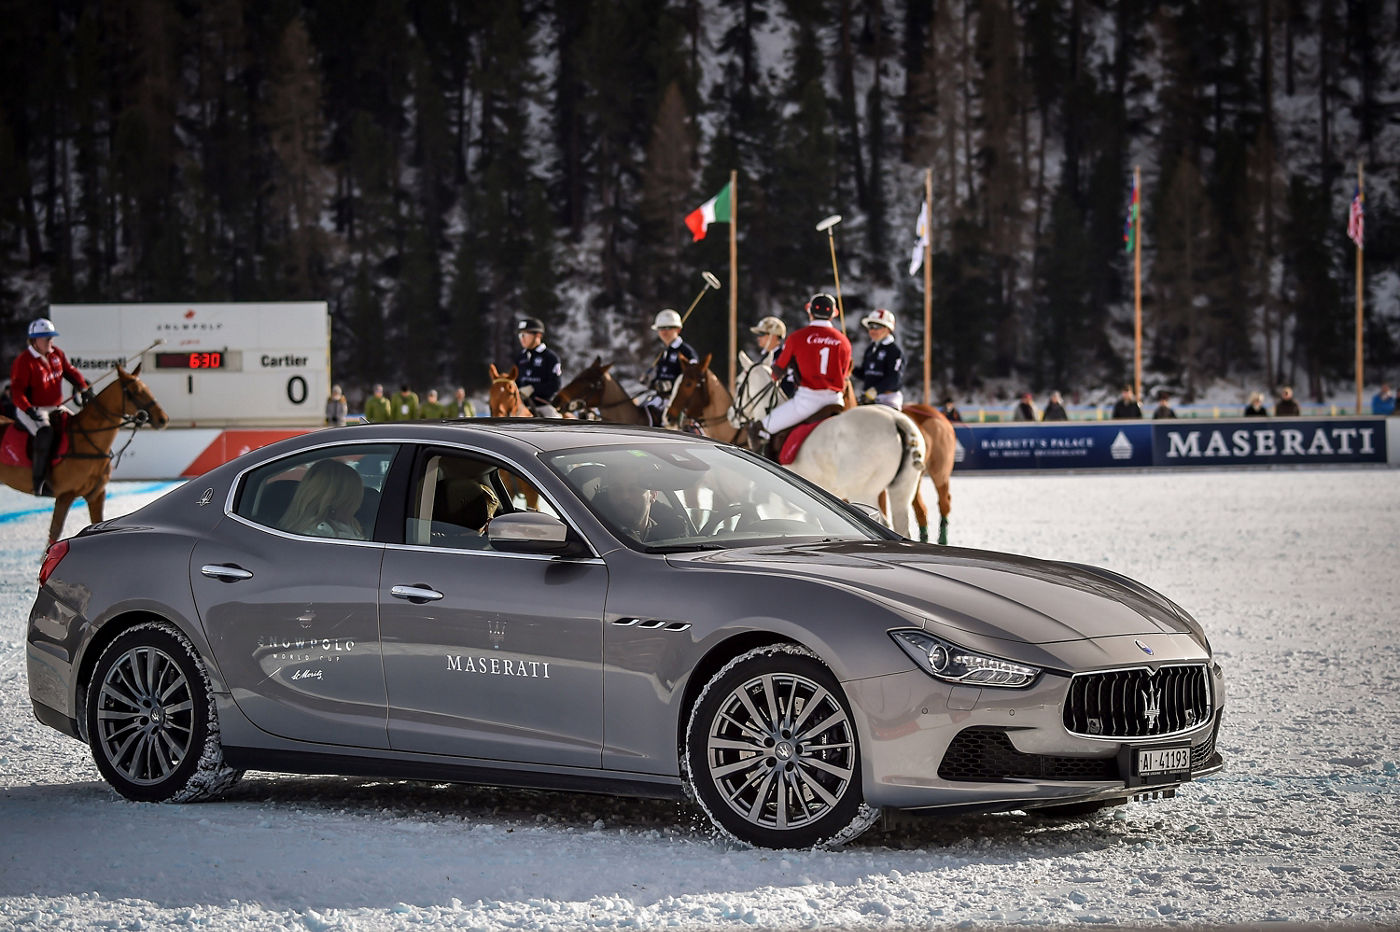 Maserati-Car-Parade-Saturday-2